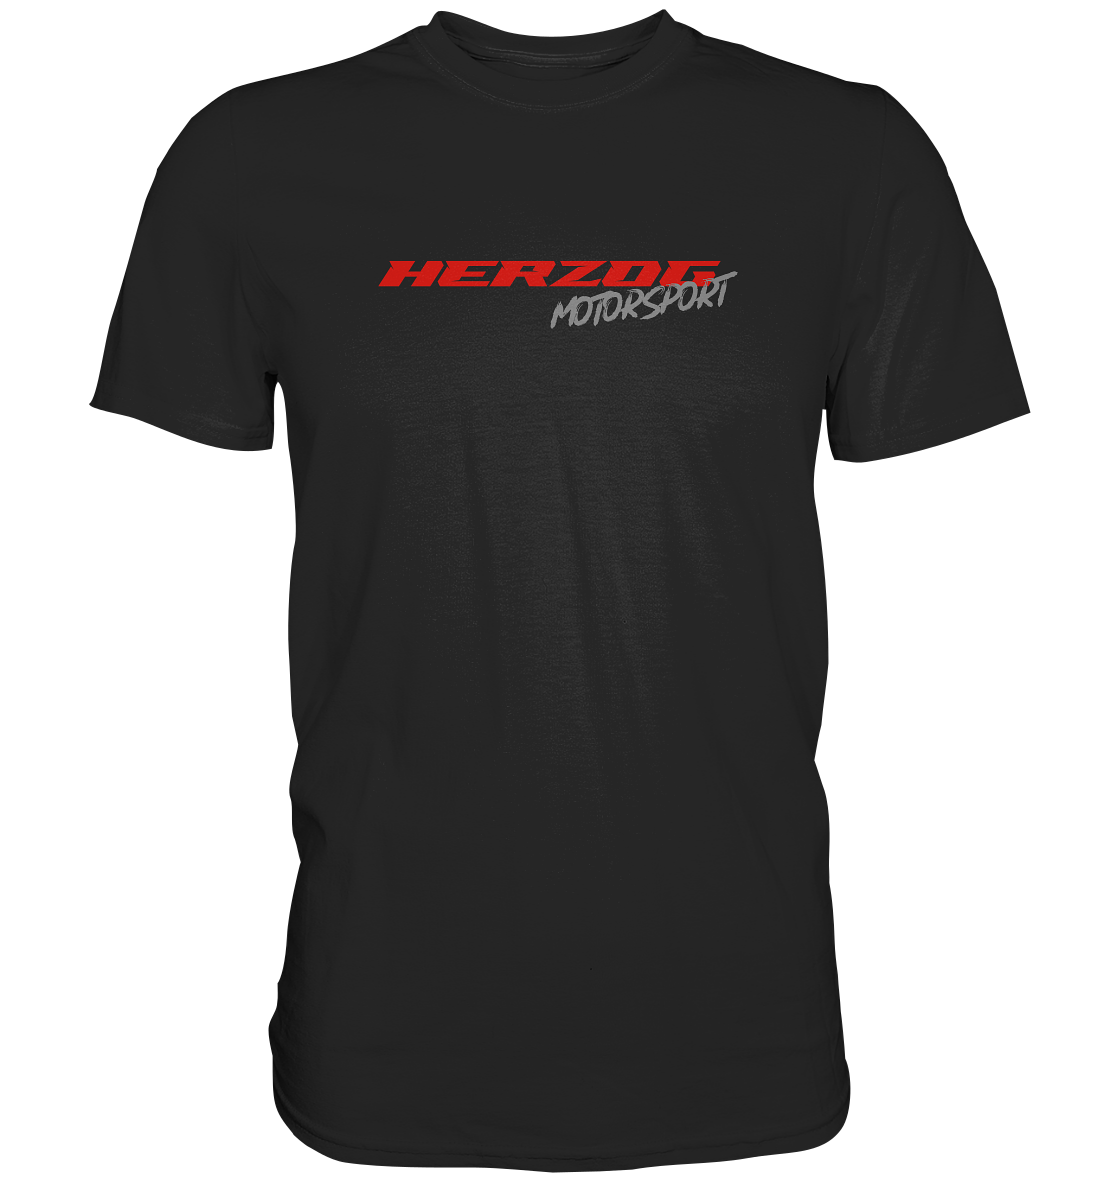 HERZOG MOTORSPORT - Basic Shirt